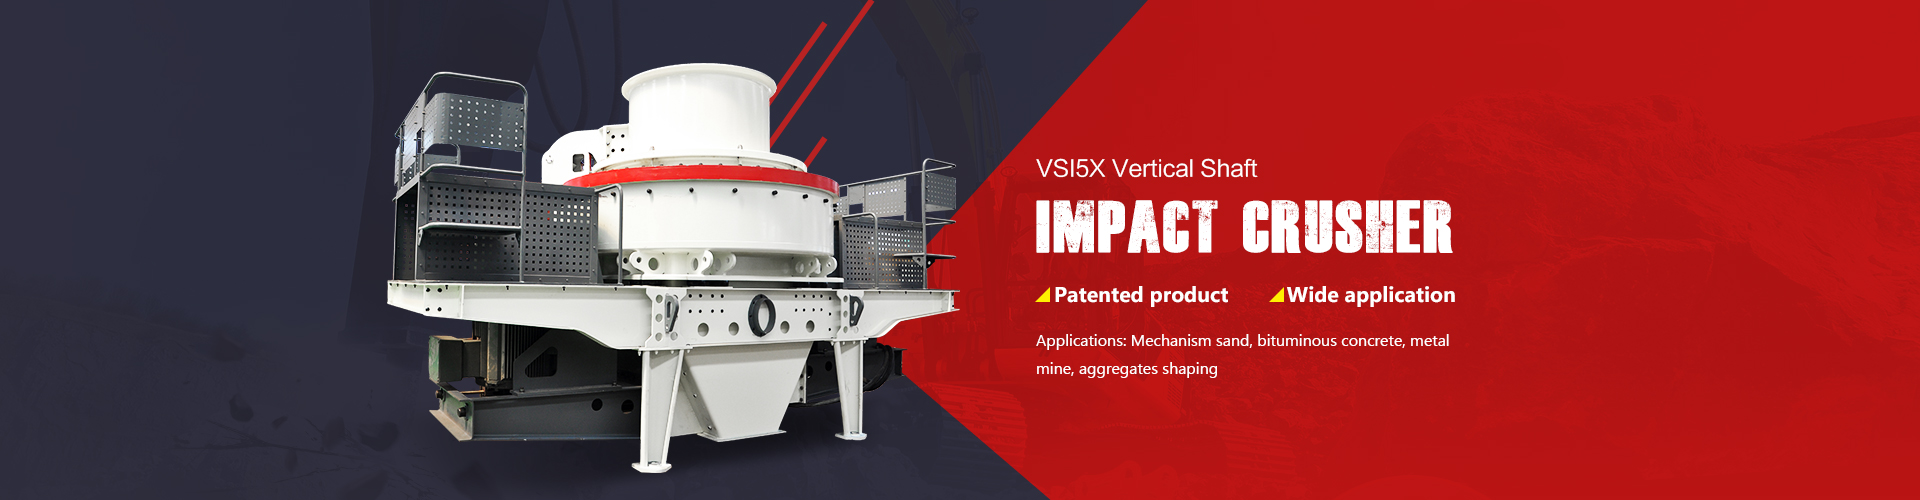 VSI5X7615 Vertical Shaft Impact Crusher